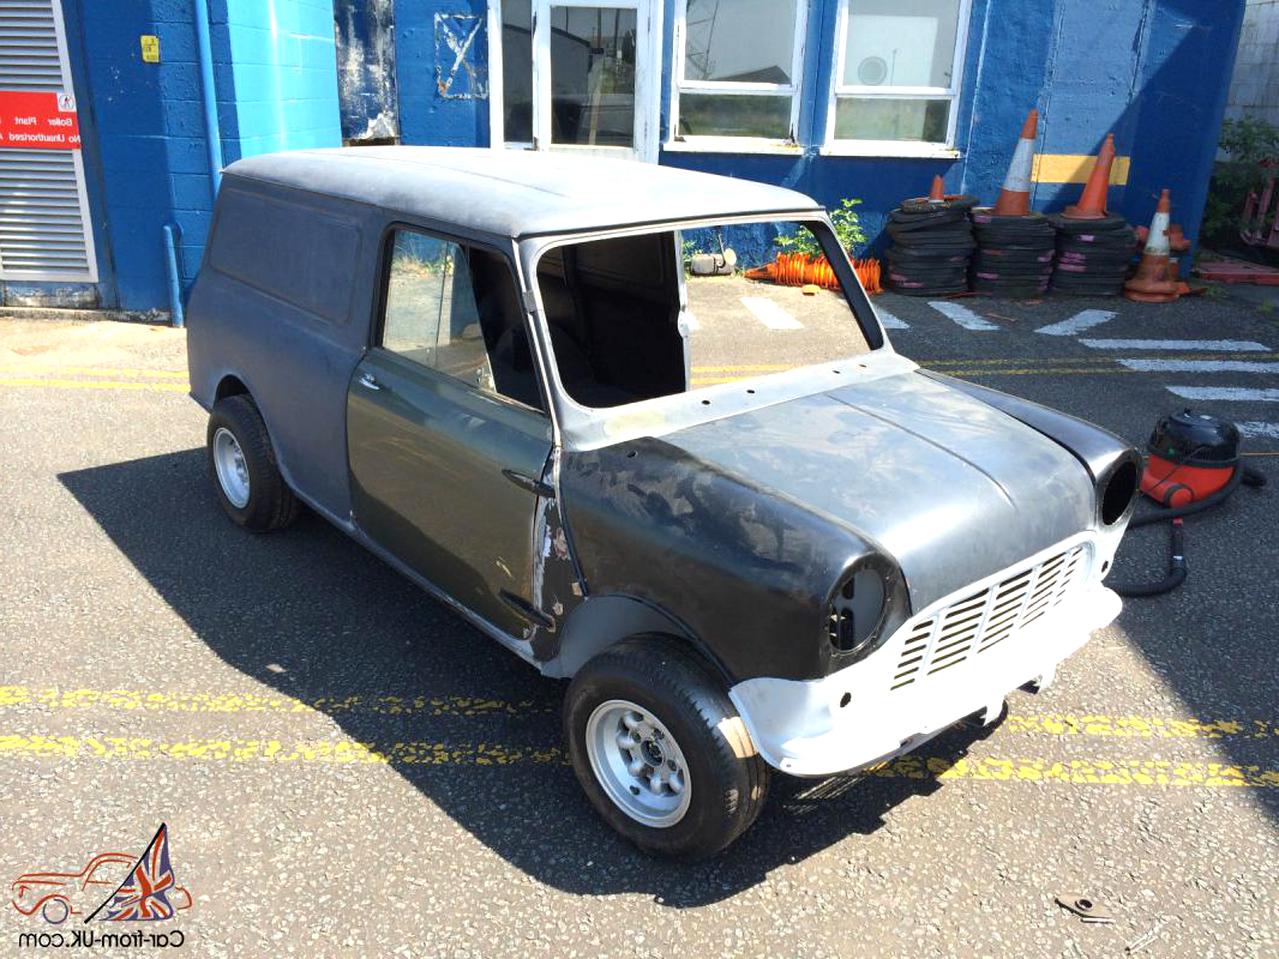 classic mini van for sale on ebay